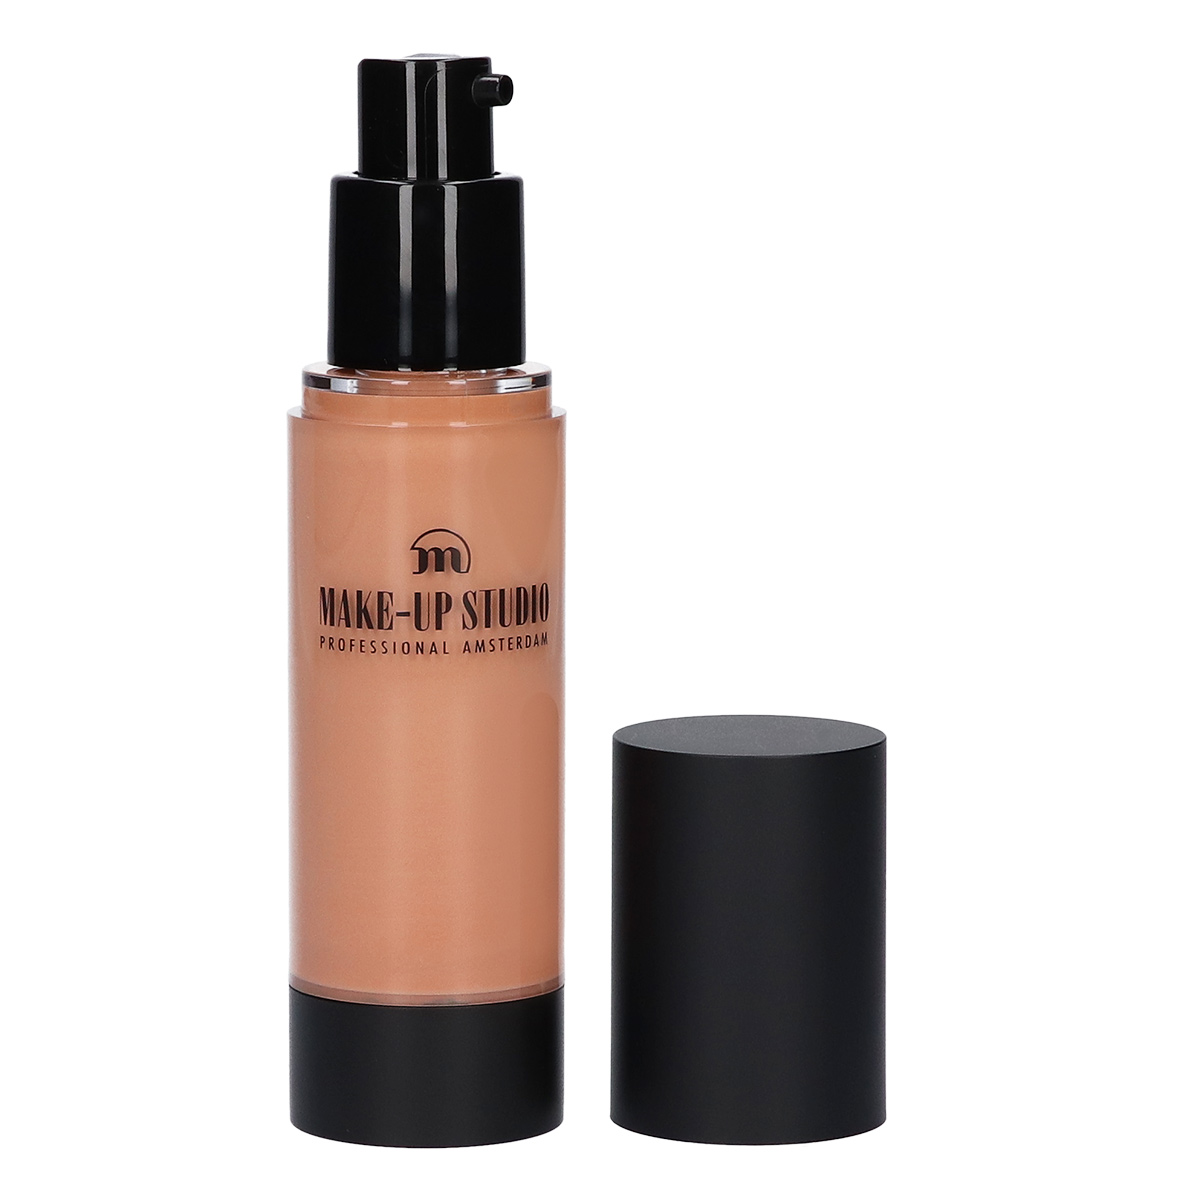 Make-up Studio Fluid Foundation No Transfer - Golden Peach